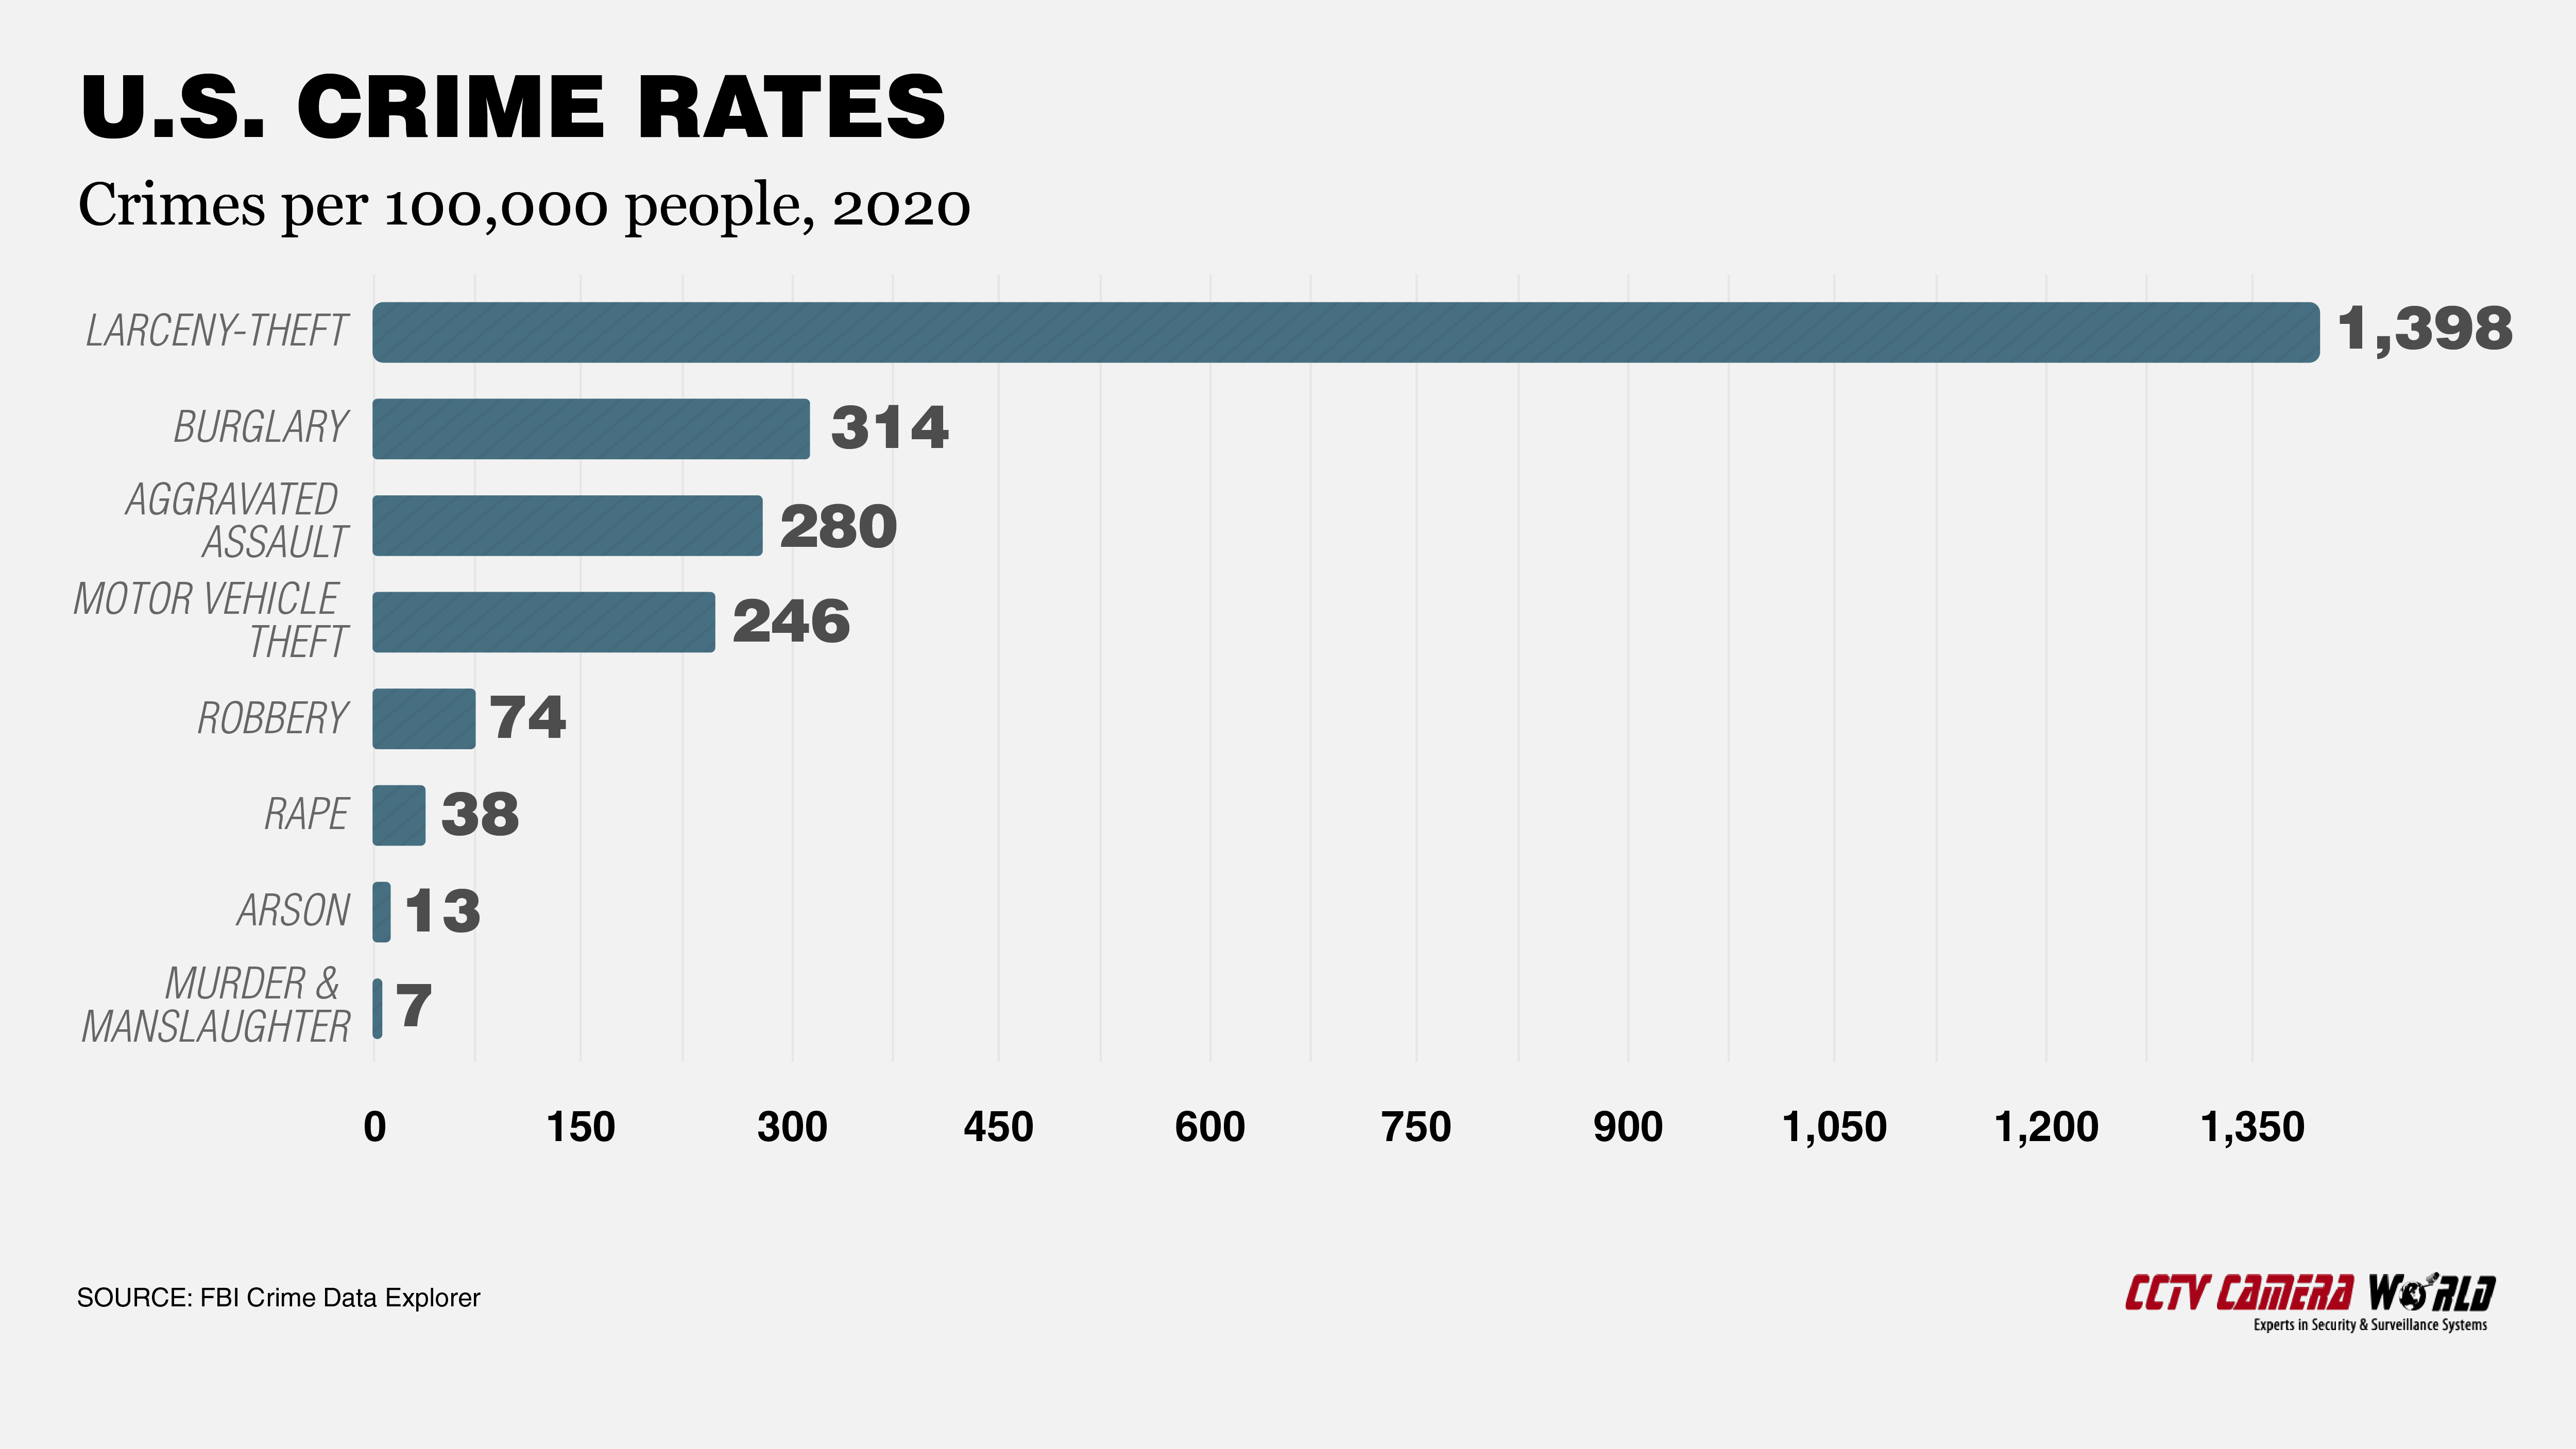 U.S. Crime Rate - Crimes per 100,000 people in 2020